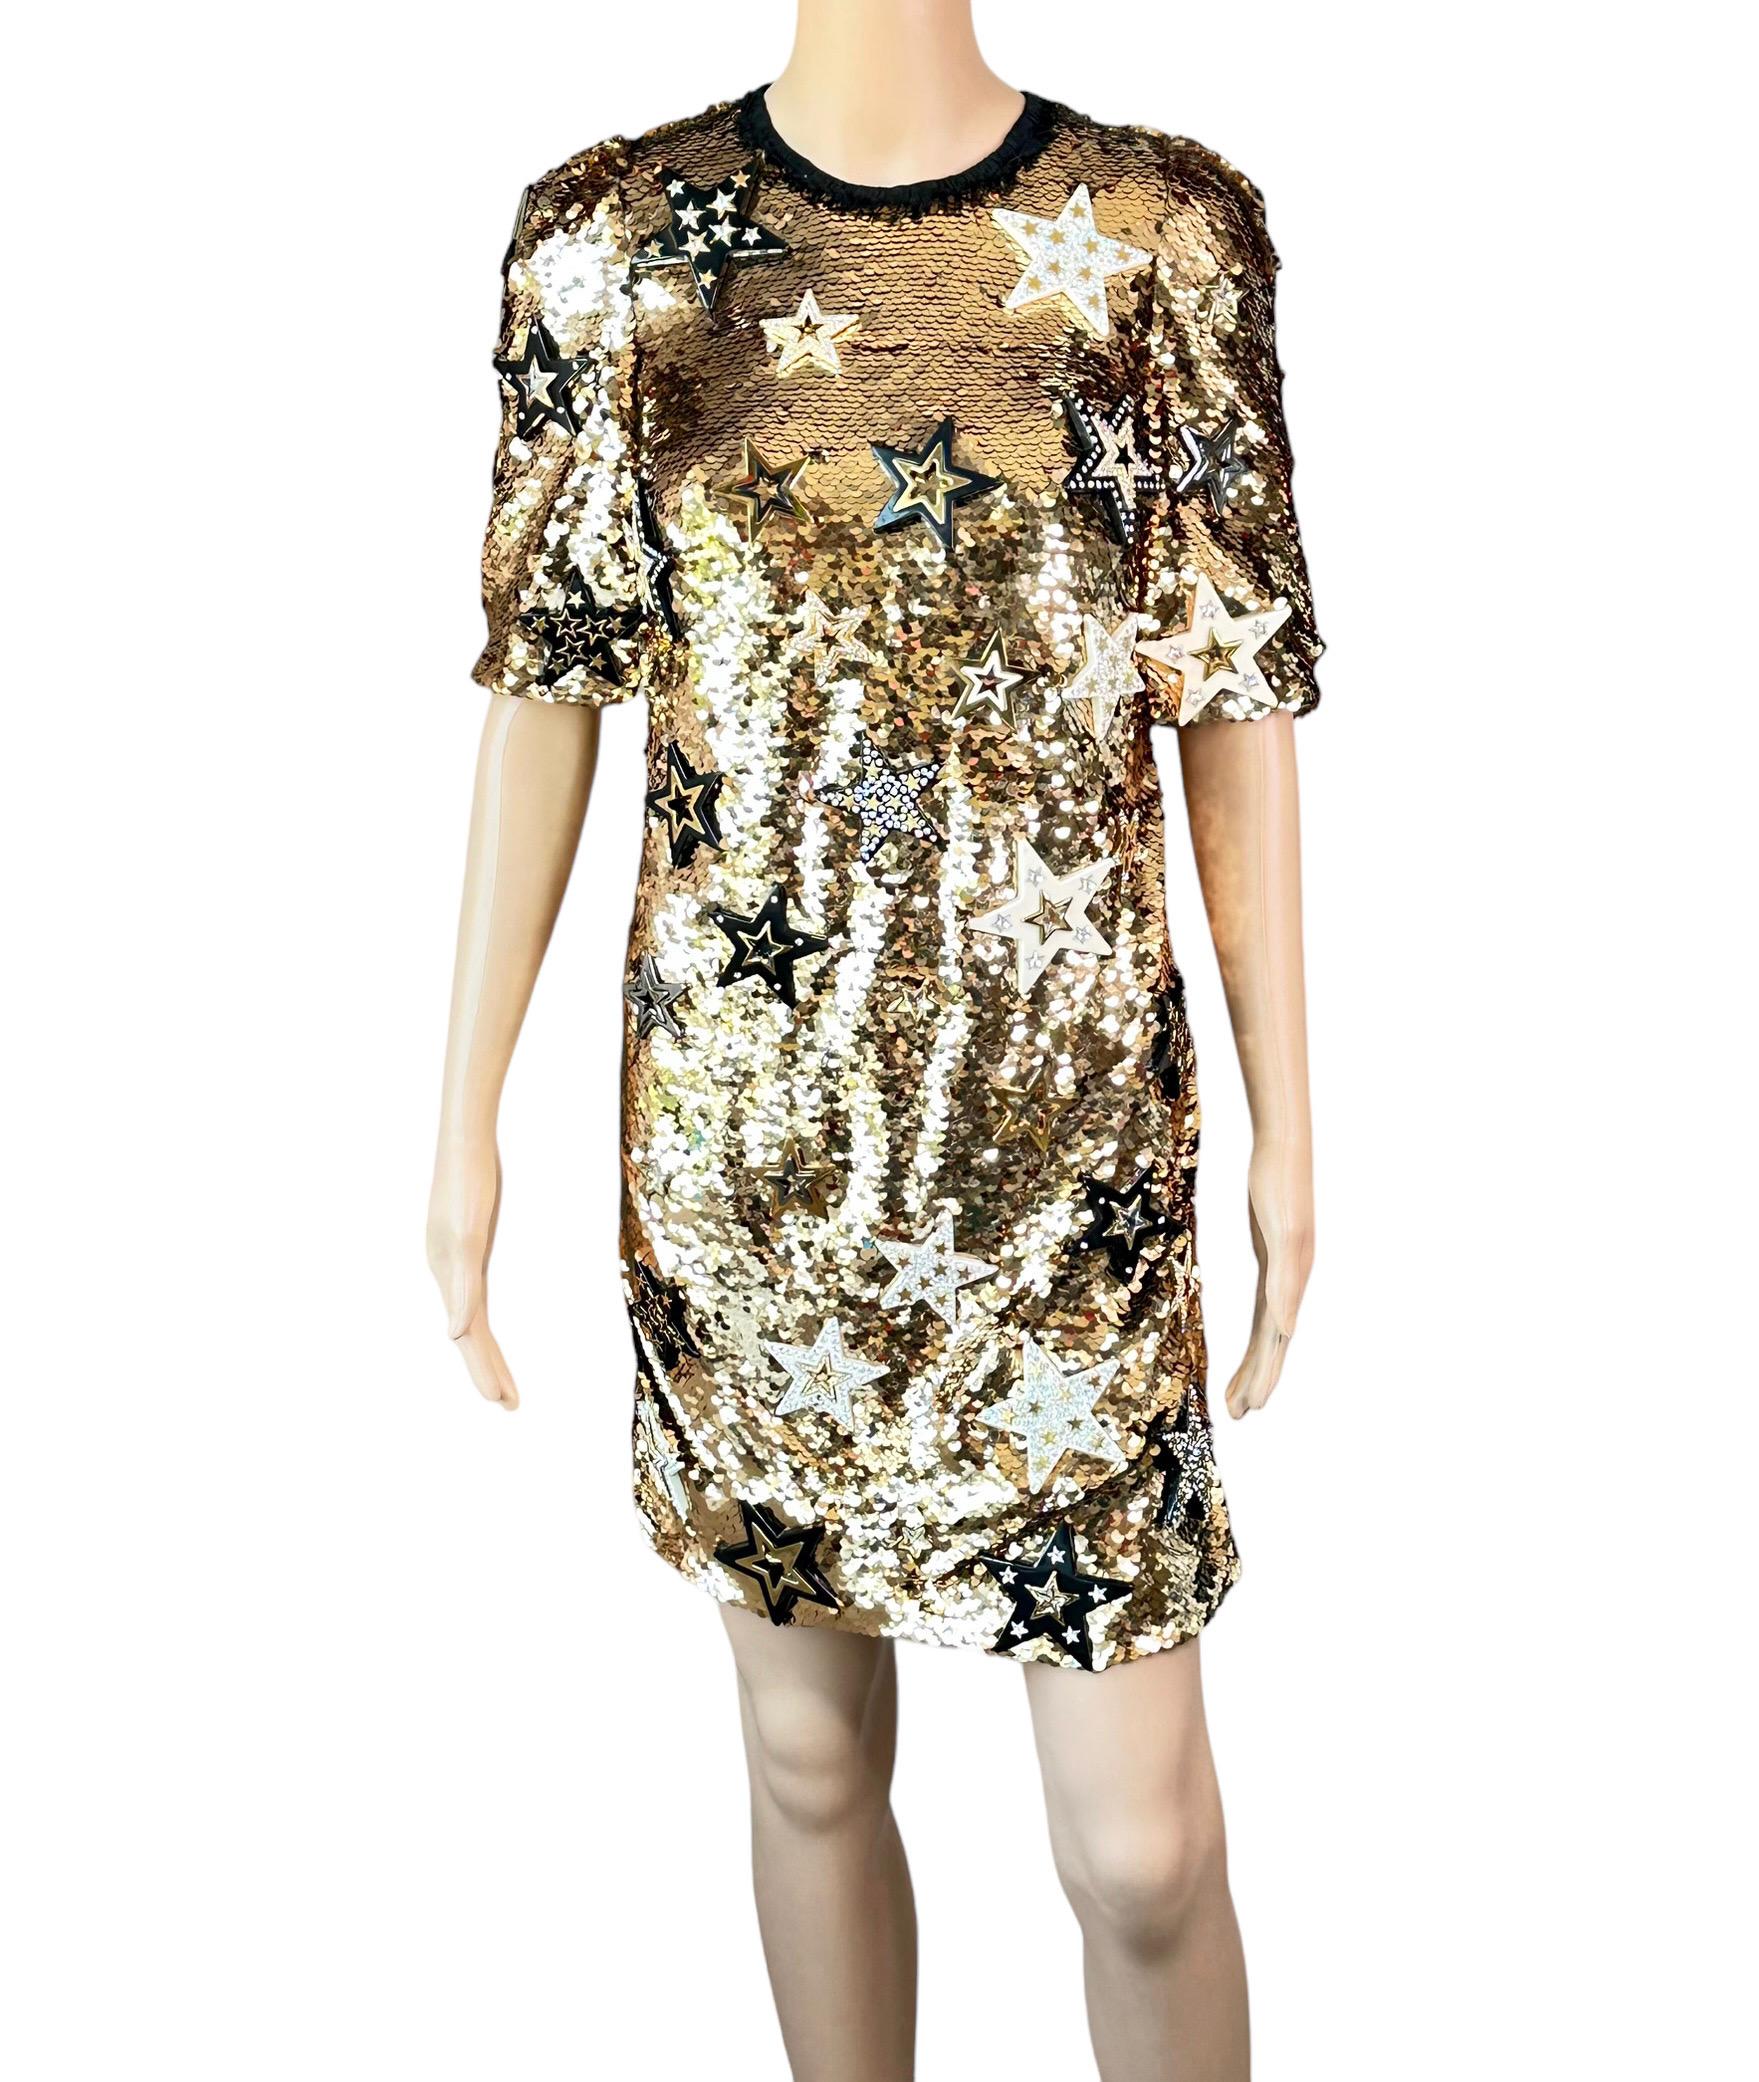 Dolce & Gabbana F/W 2011 Runway Unworn Embellished Star Sequined Gold Mini Dress For Sale 1